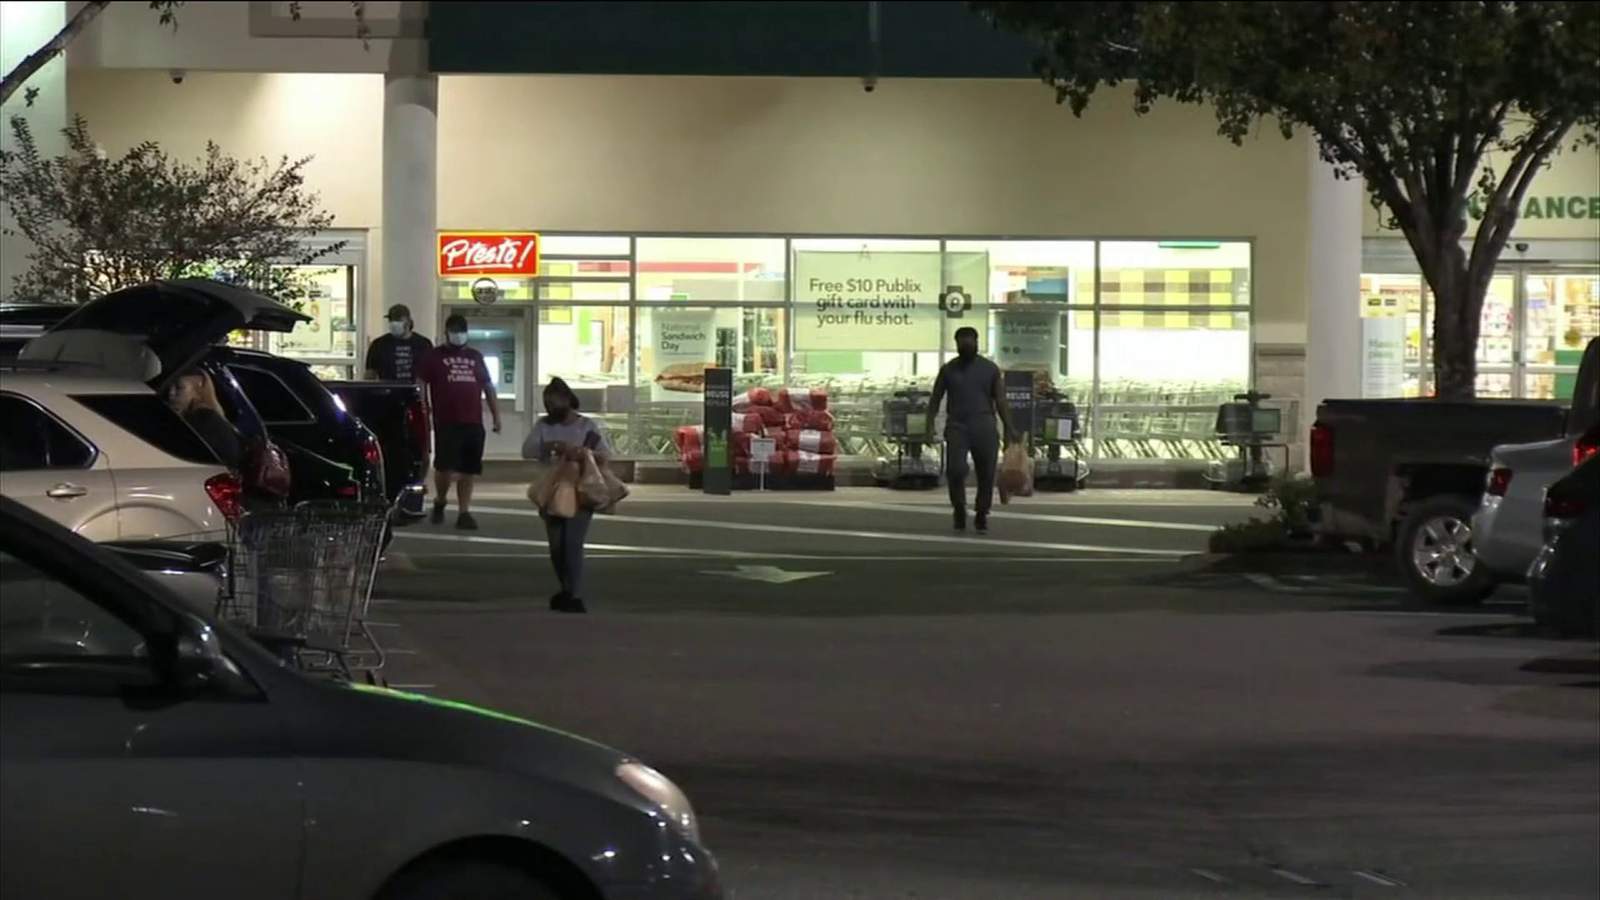 Man accused of taking upskirt photos in Jacksonville supermarkets